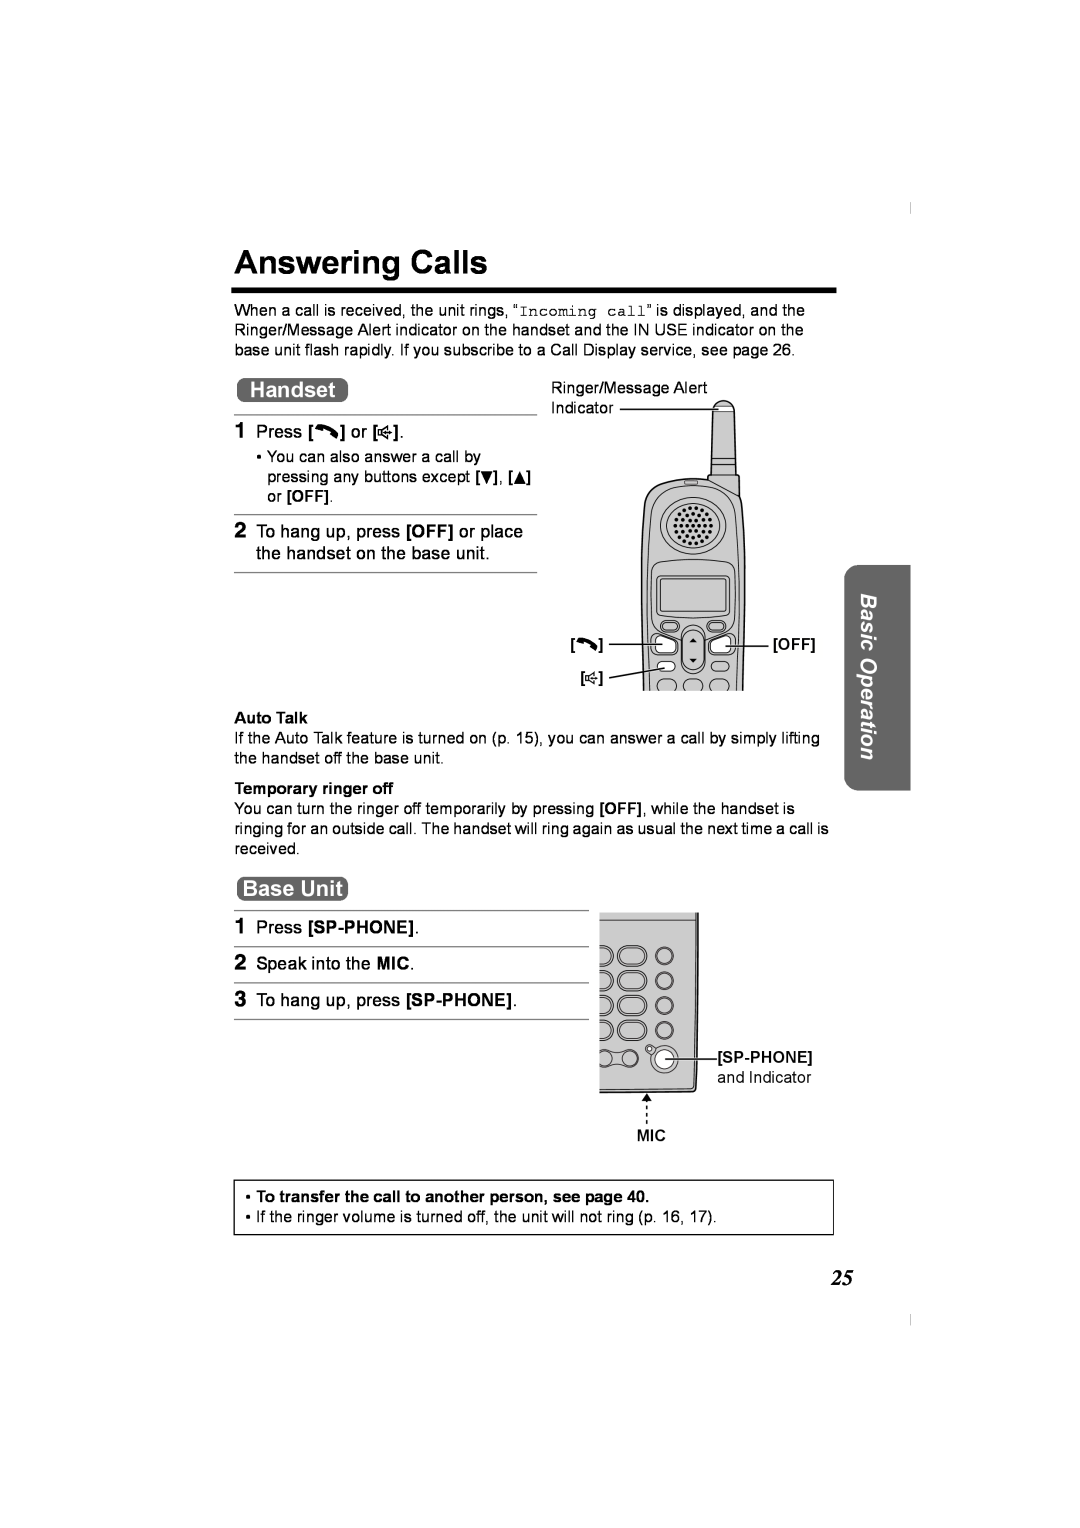 Panasonic KX-TG2336C Answering Calls, Handset, Base Unit, Press C or s, Speak into the MIC 3 To hang up, press SP-PHONE 